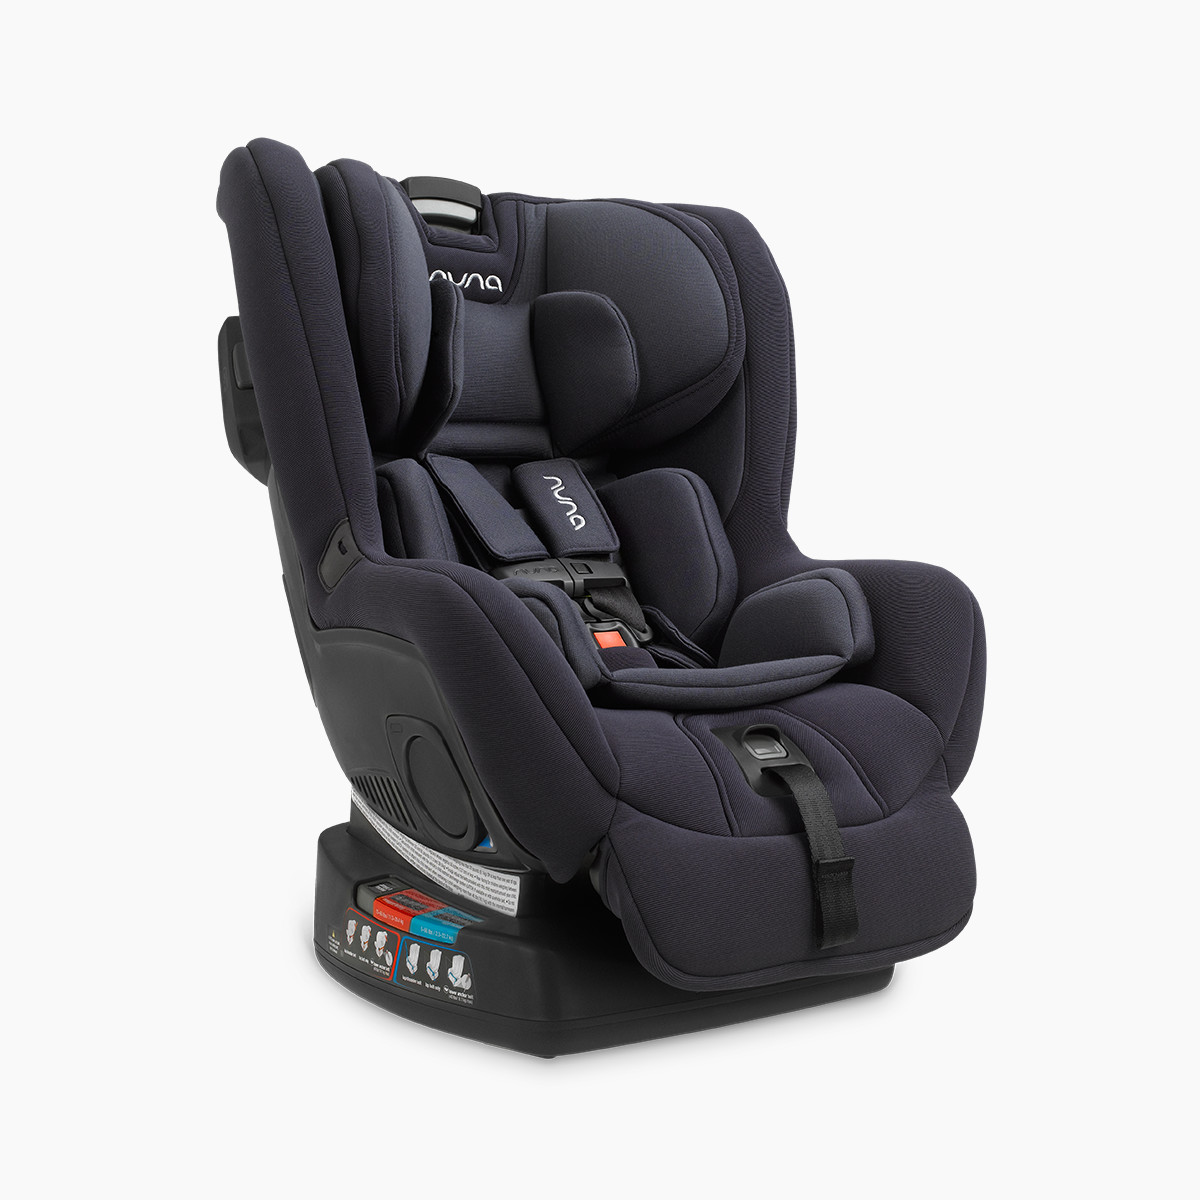 Nuna 2018 RAVA Convertible Car Seat - Indigo (2016).